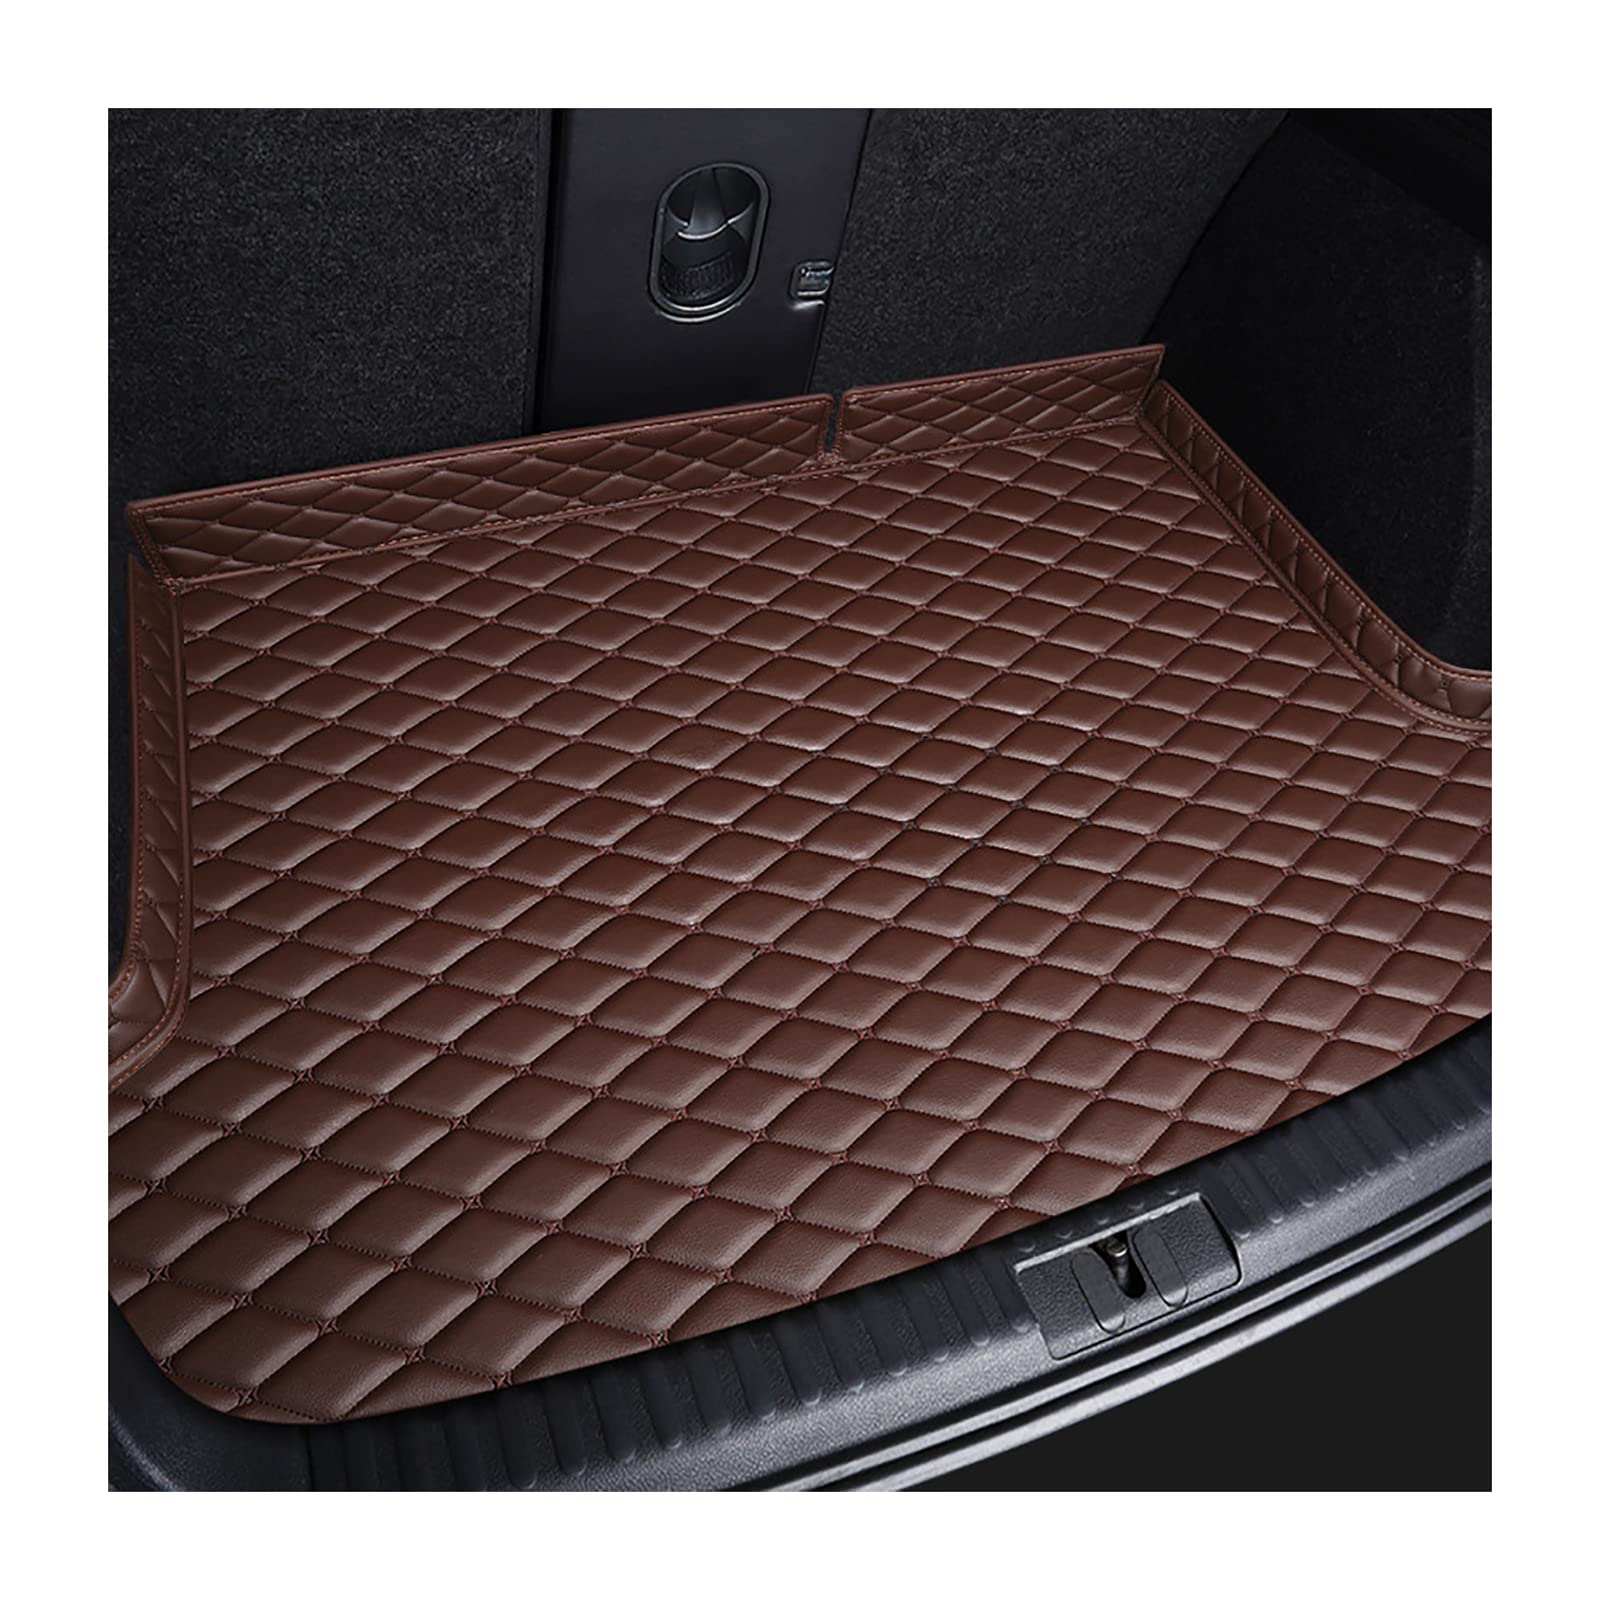 Car Boot Protection Mat mit Erhöhtem Rand, Kompatibel mit Audi A5 4 door 2010-2016, Boot Protector Boot Mat Accessories,5-Coffee von YPGHBHD